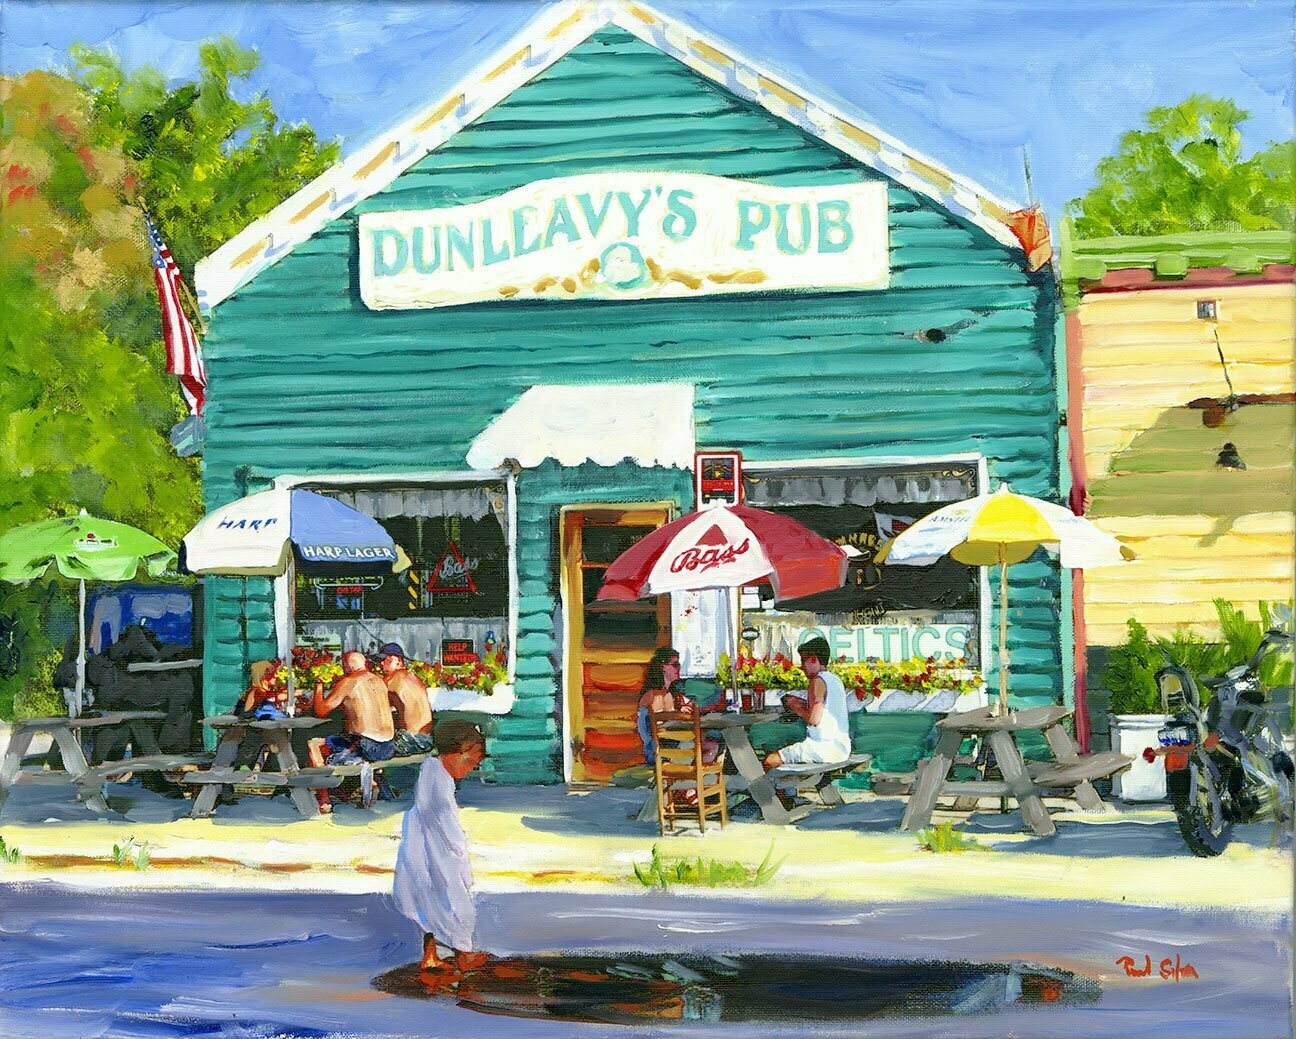 "Dunleavys Pub"